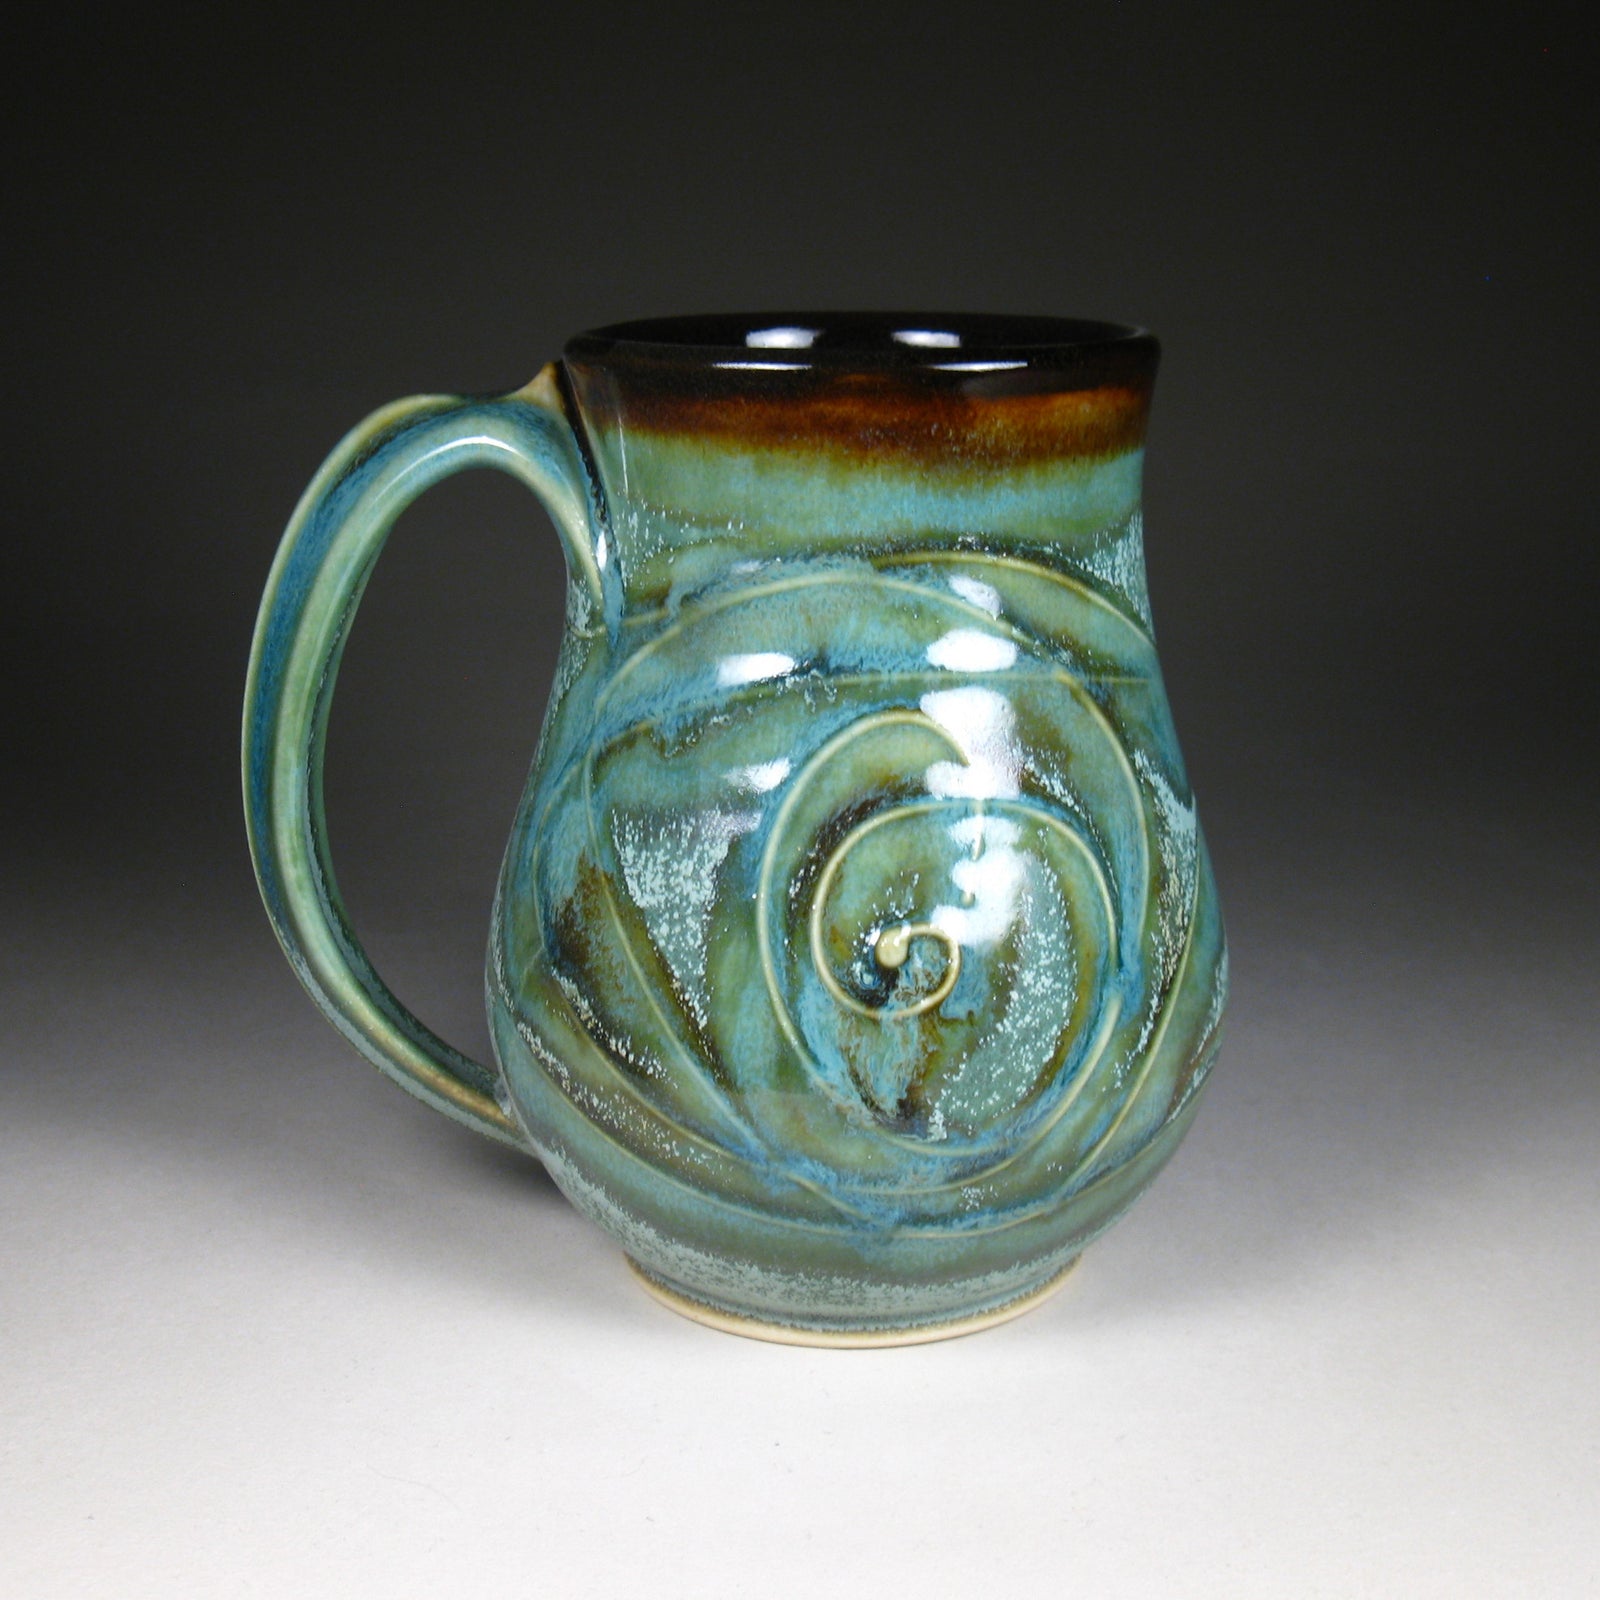 Ceramic Pitcher with Lid 200ml, turquoise-purple glaze